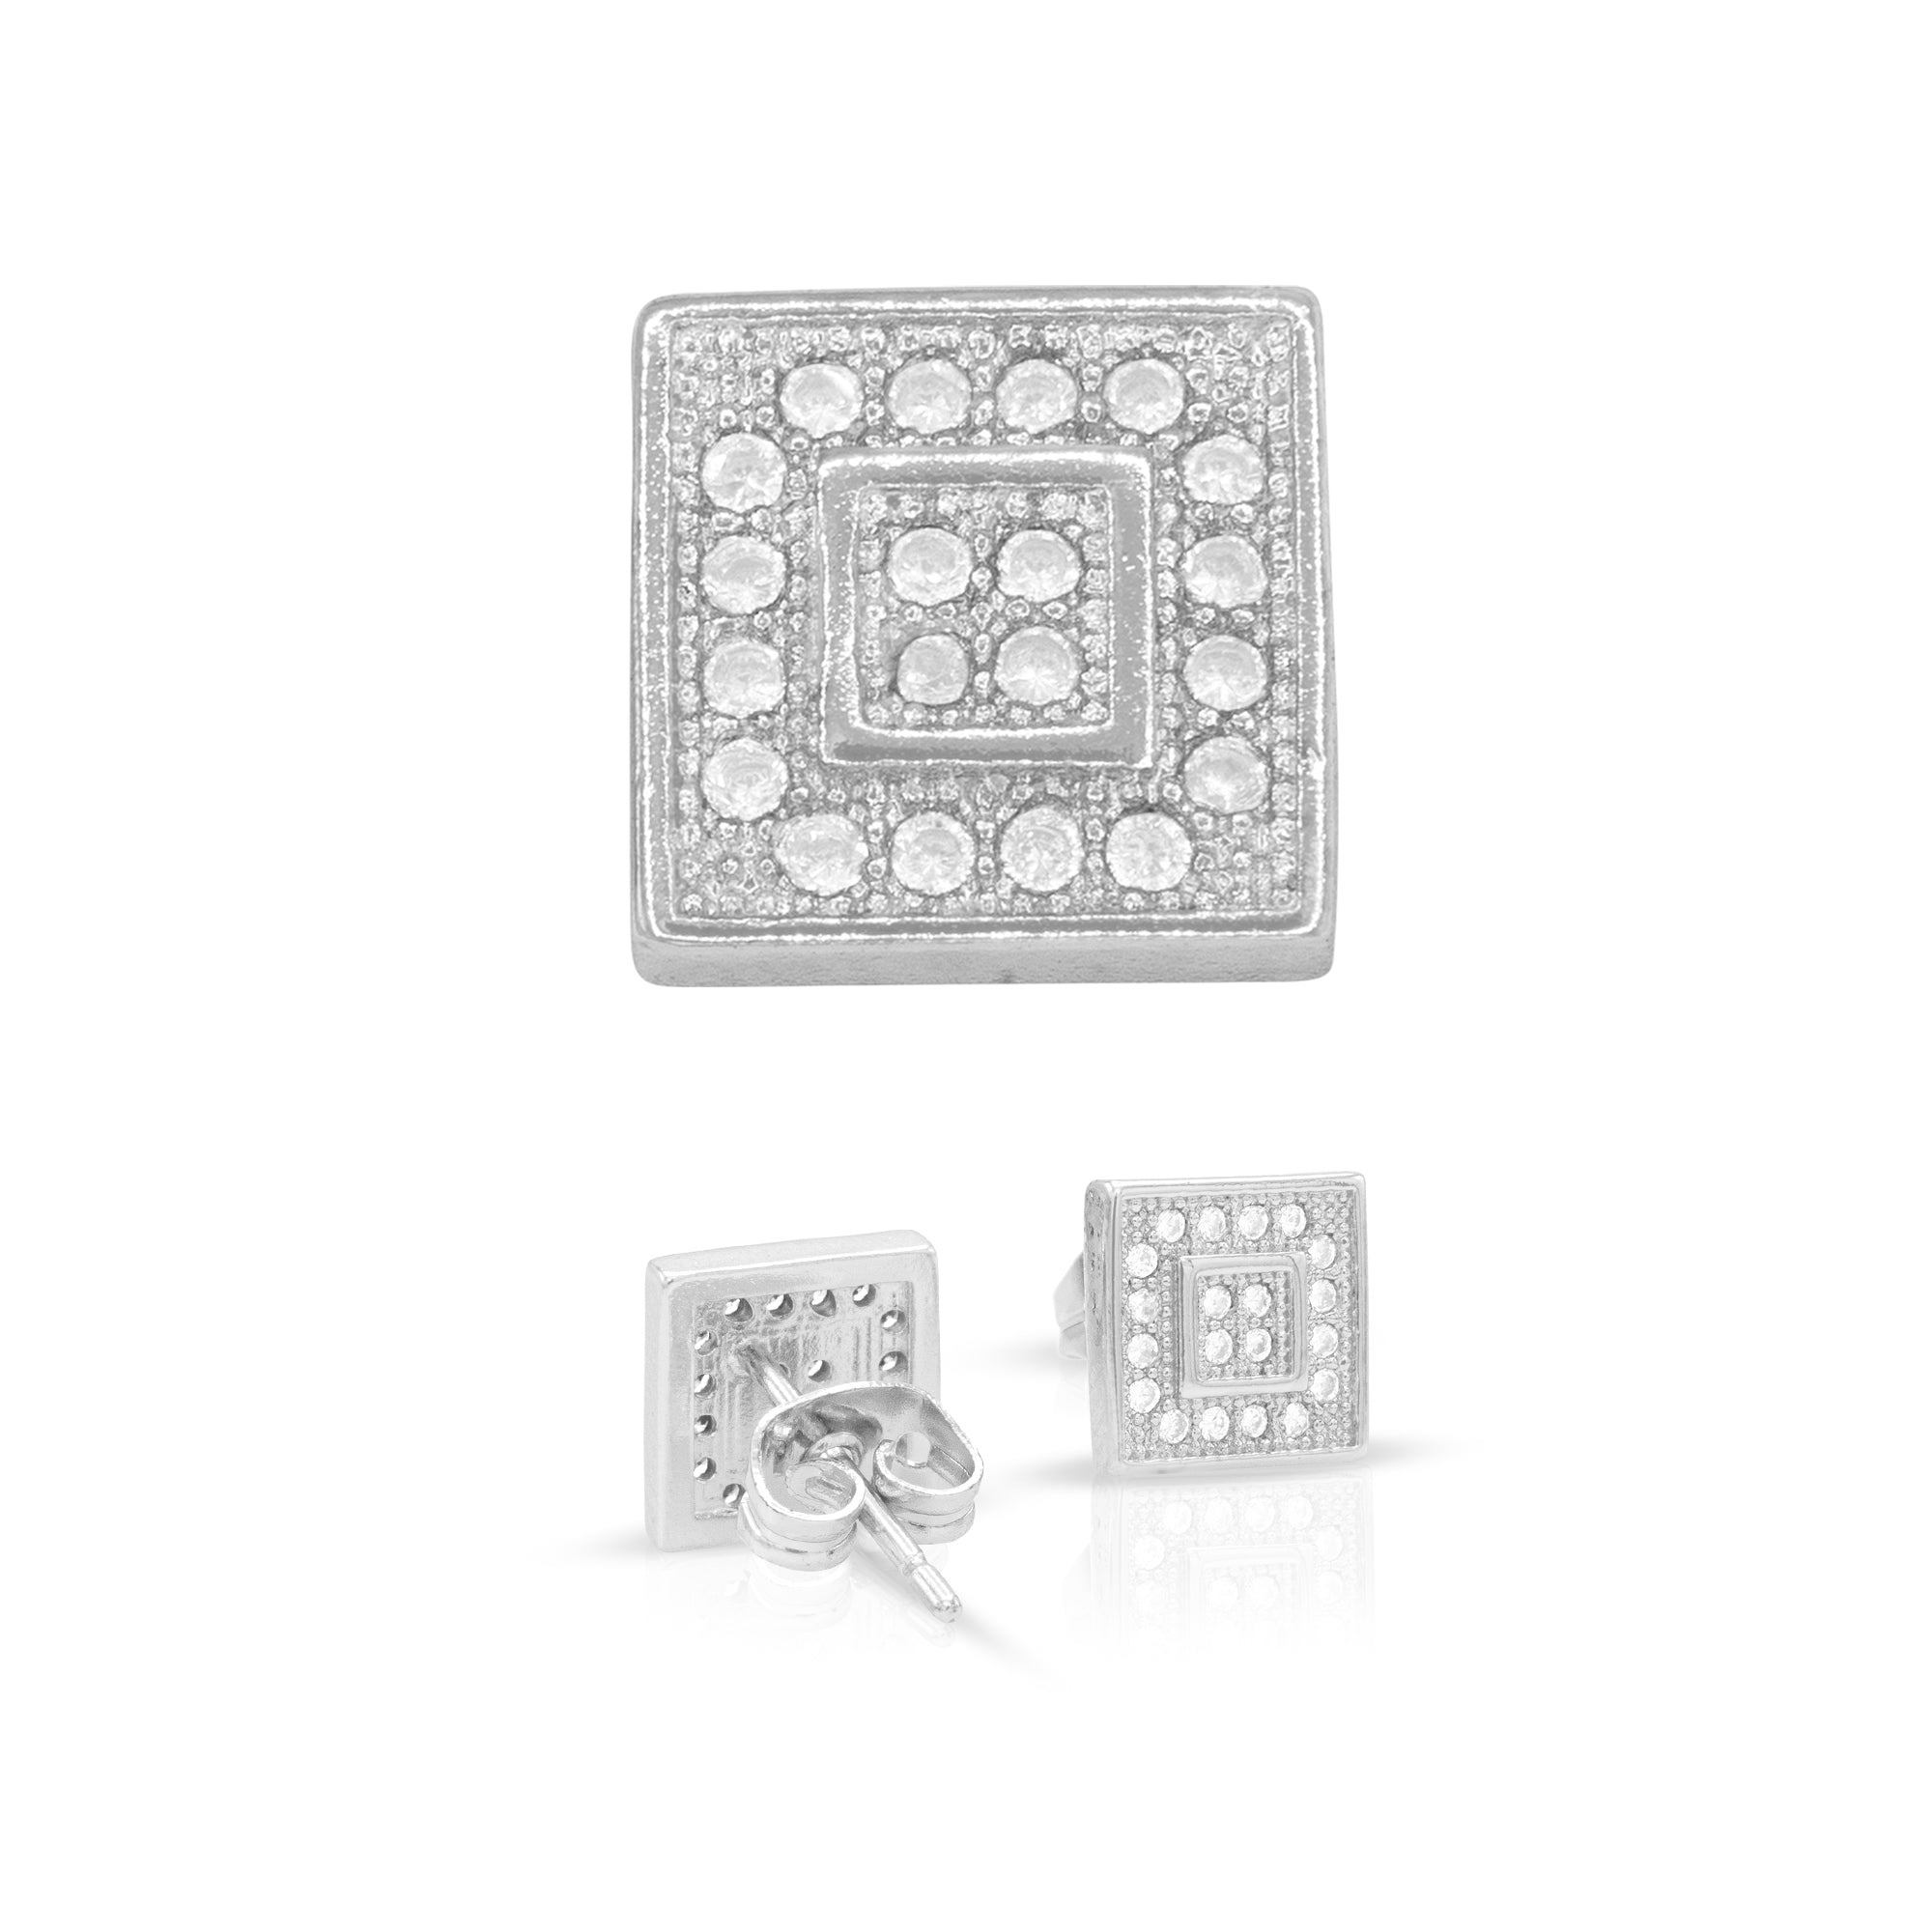 Double Square 2 Cubic Zirconia Earrings 14K Gold Filled Silver Hip Hop Studs Jewelry Women Men